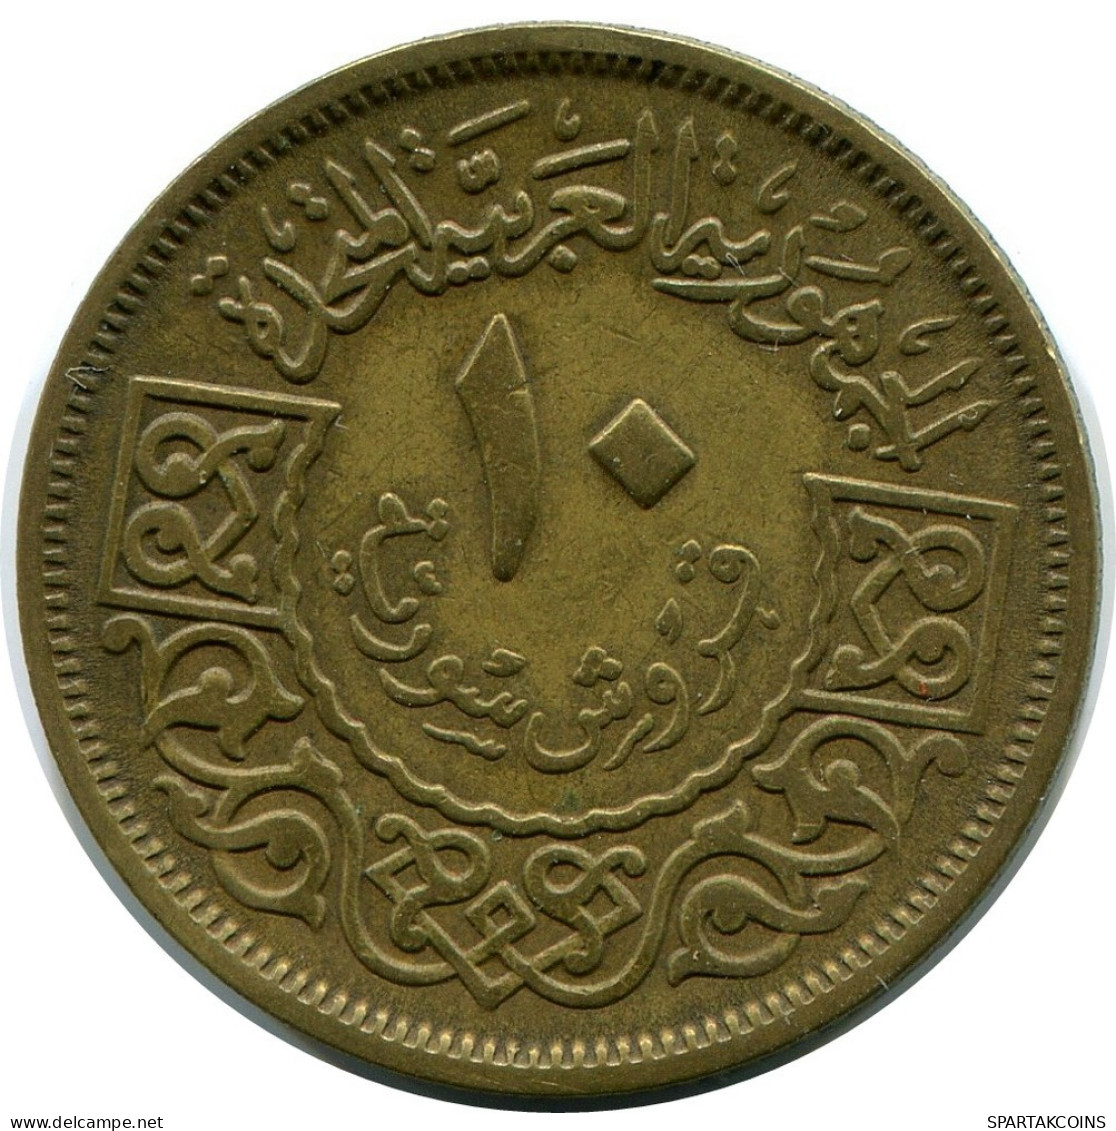 10 QIRSH / PIASTRES 1960 SYRIEN SYRIA Islamisch Münze #AP557.D.D.A - Syria